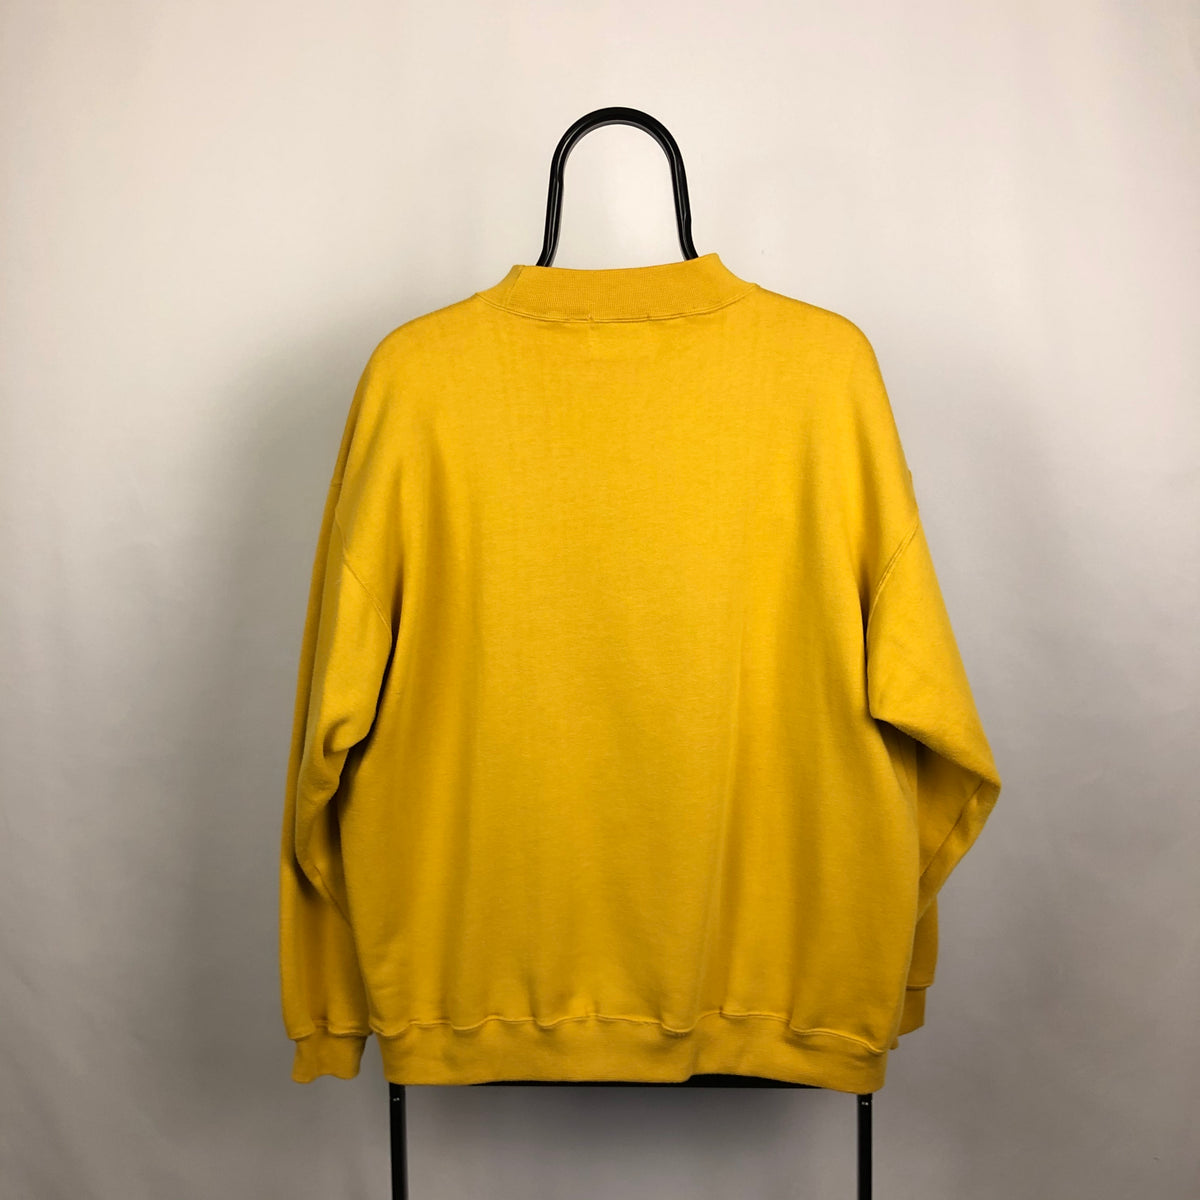 Vintage Naf Naf Embroidered Spellout Sweatshirt in Yellow - Men's Larg ...